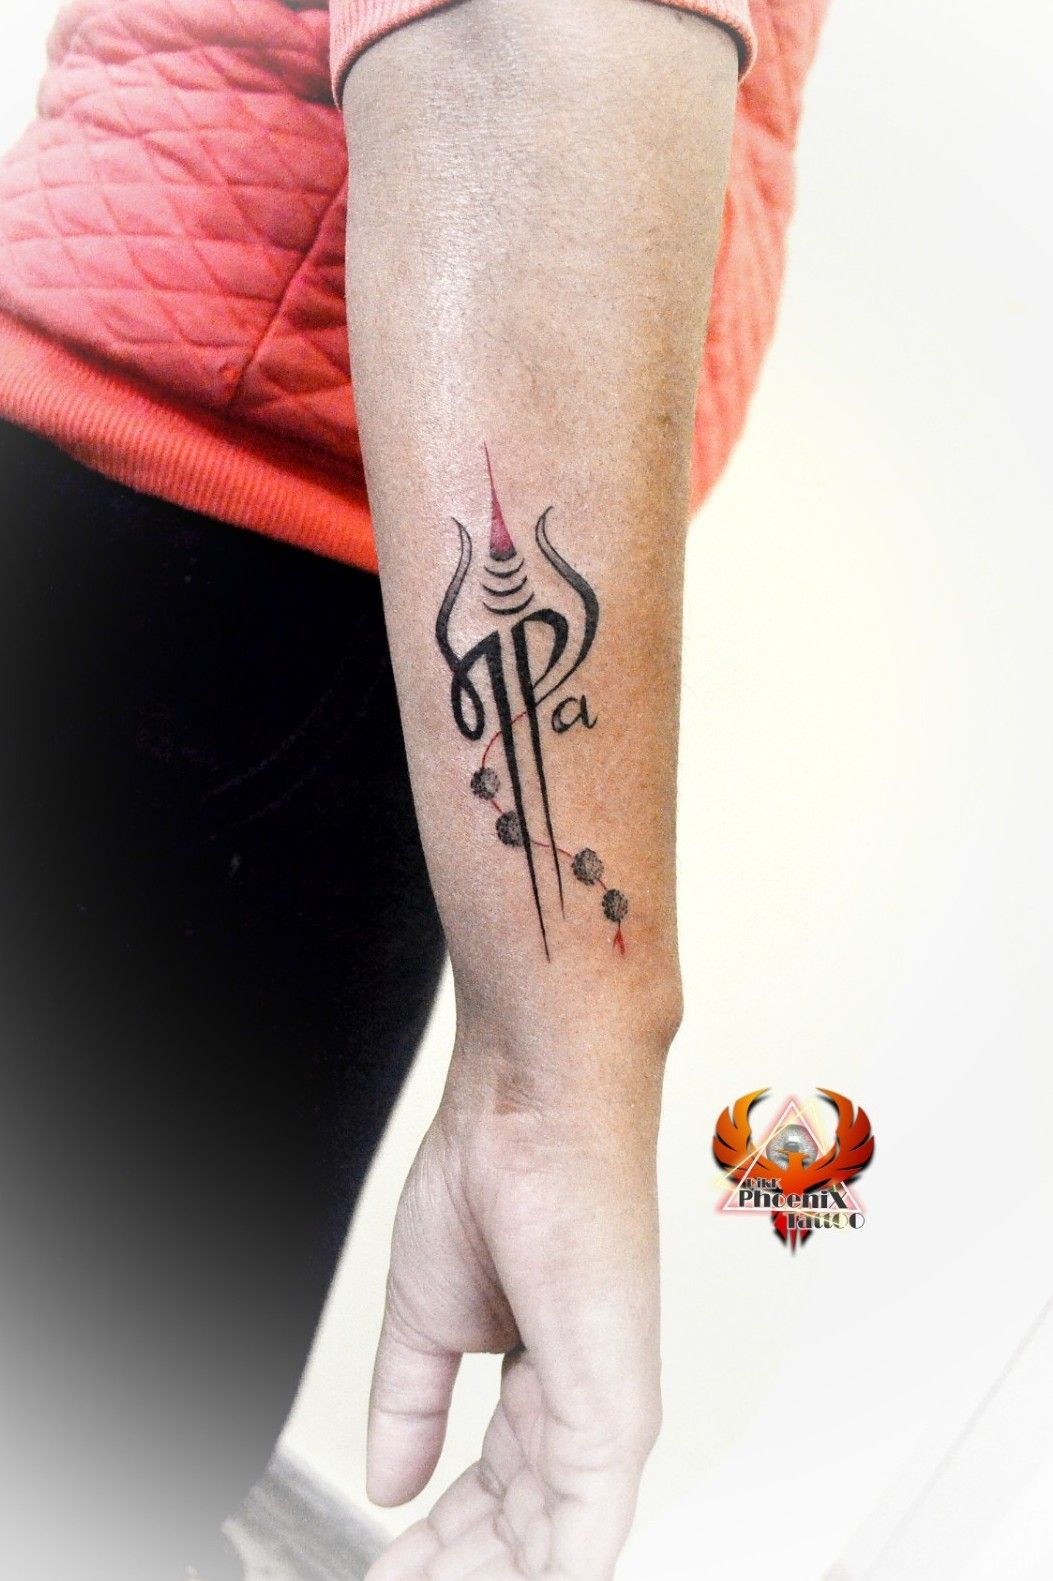 Trishul damru rudraksh mahadev name tattoo design by Mr Tattooholic tattoo  studio Ahmedabad artis  Shiva tattoo design Tattoo designs wrist  Forearm band tattoos